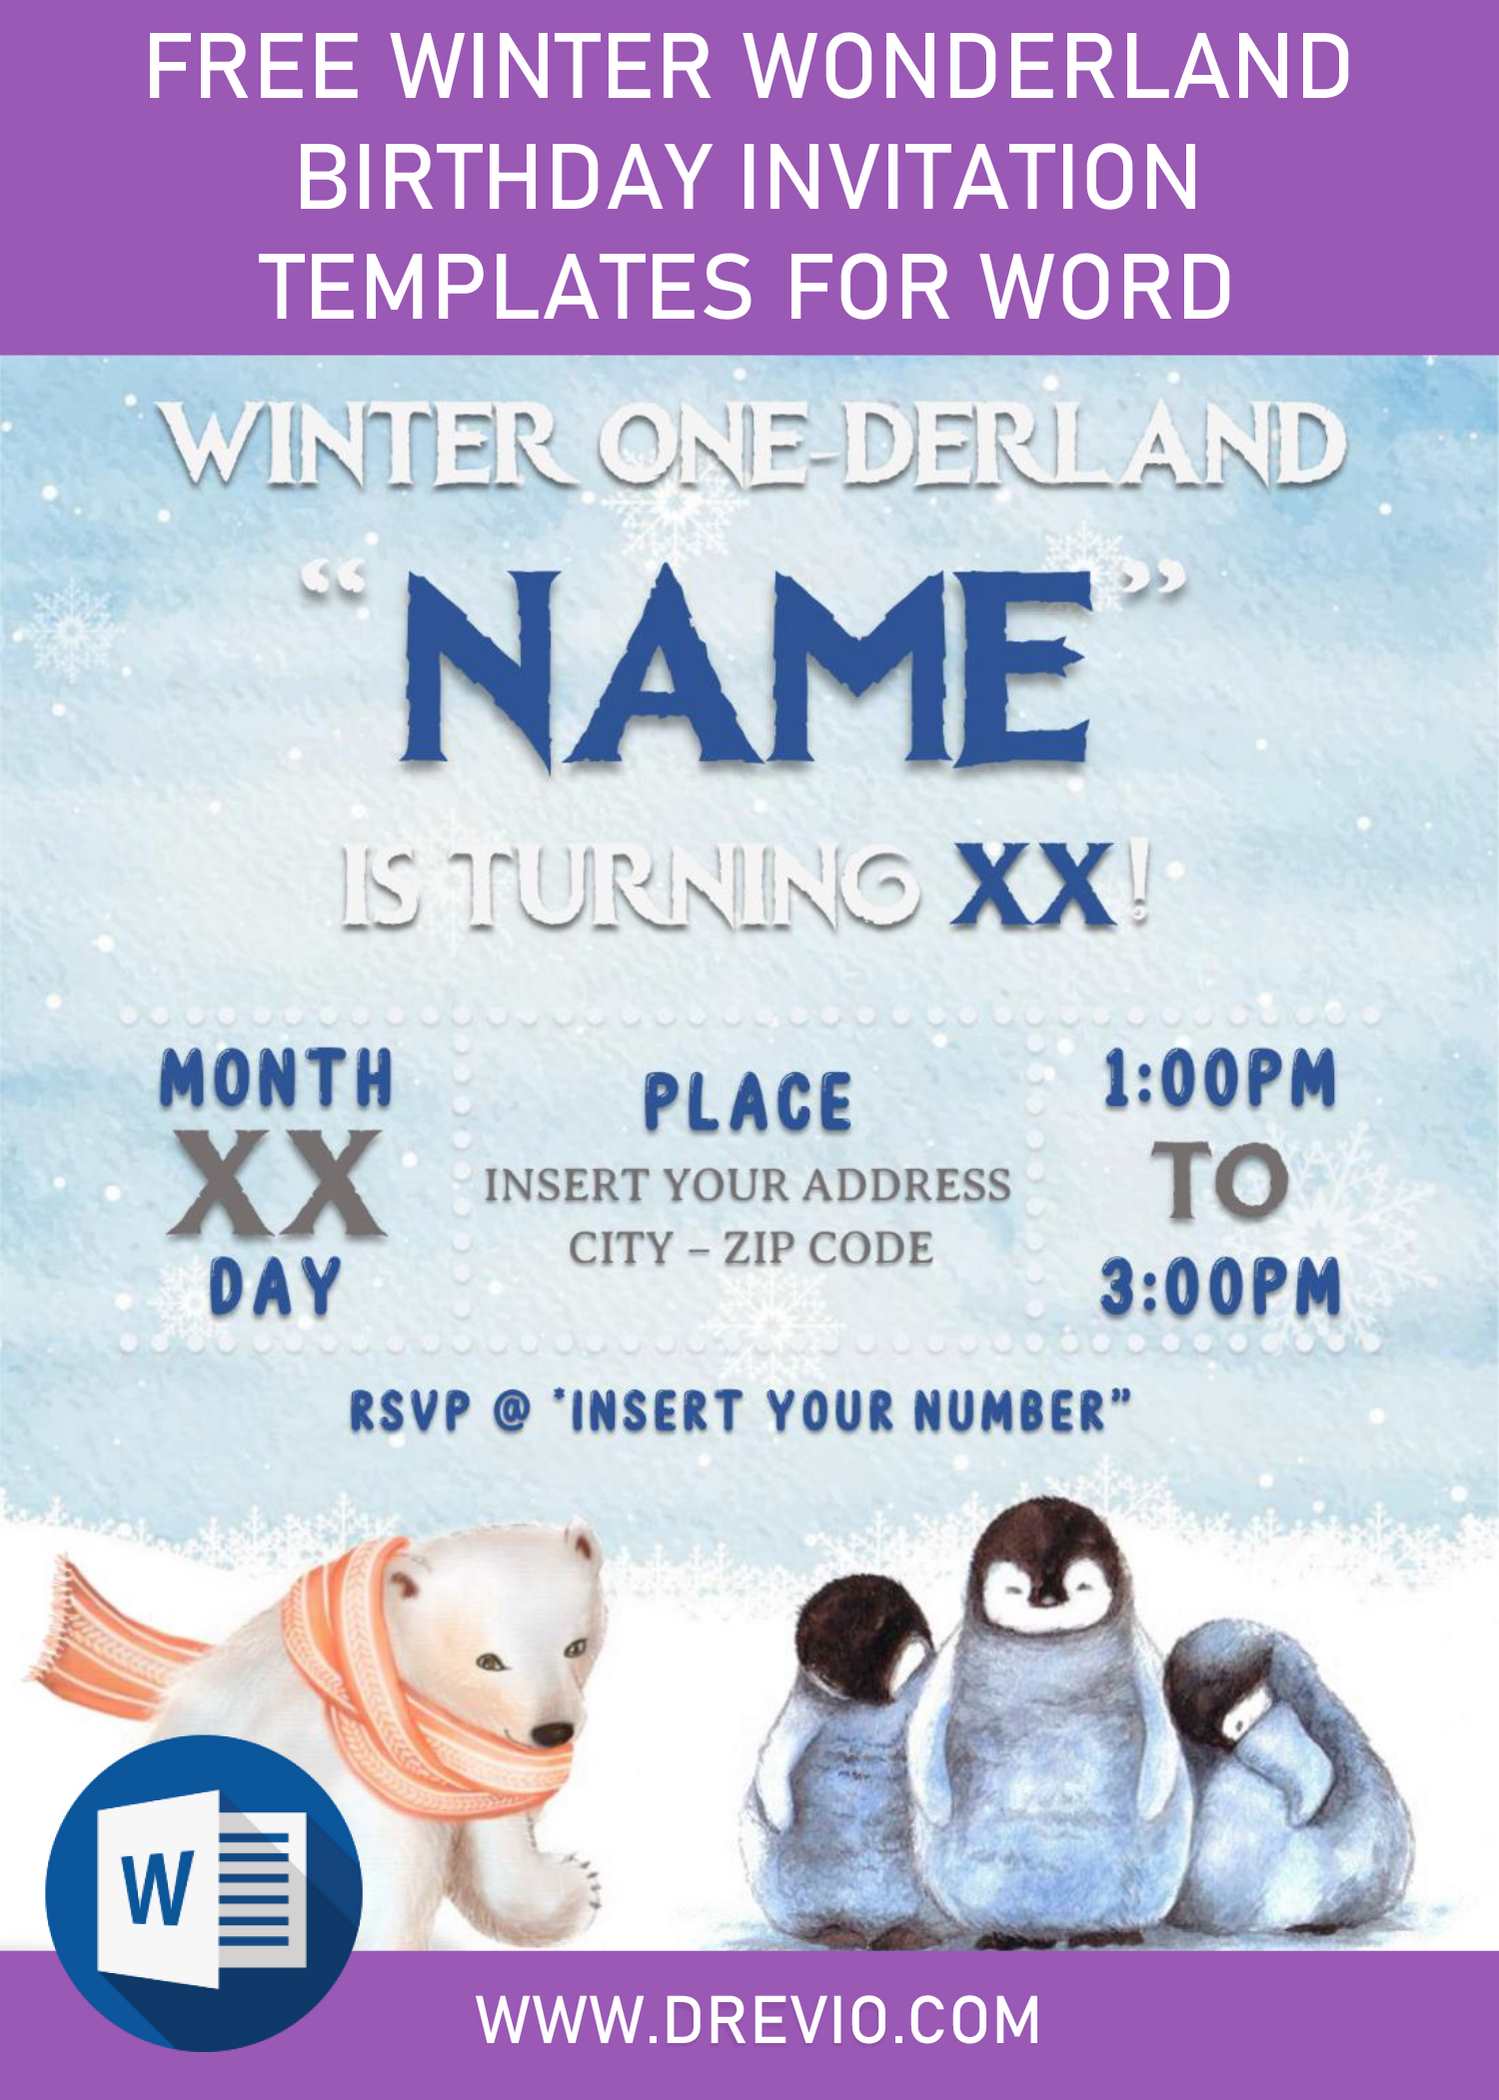 Free Winter Wonderland Birthday Invitation Templates For Word and has